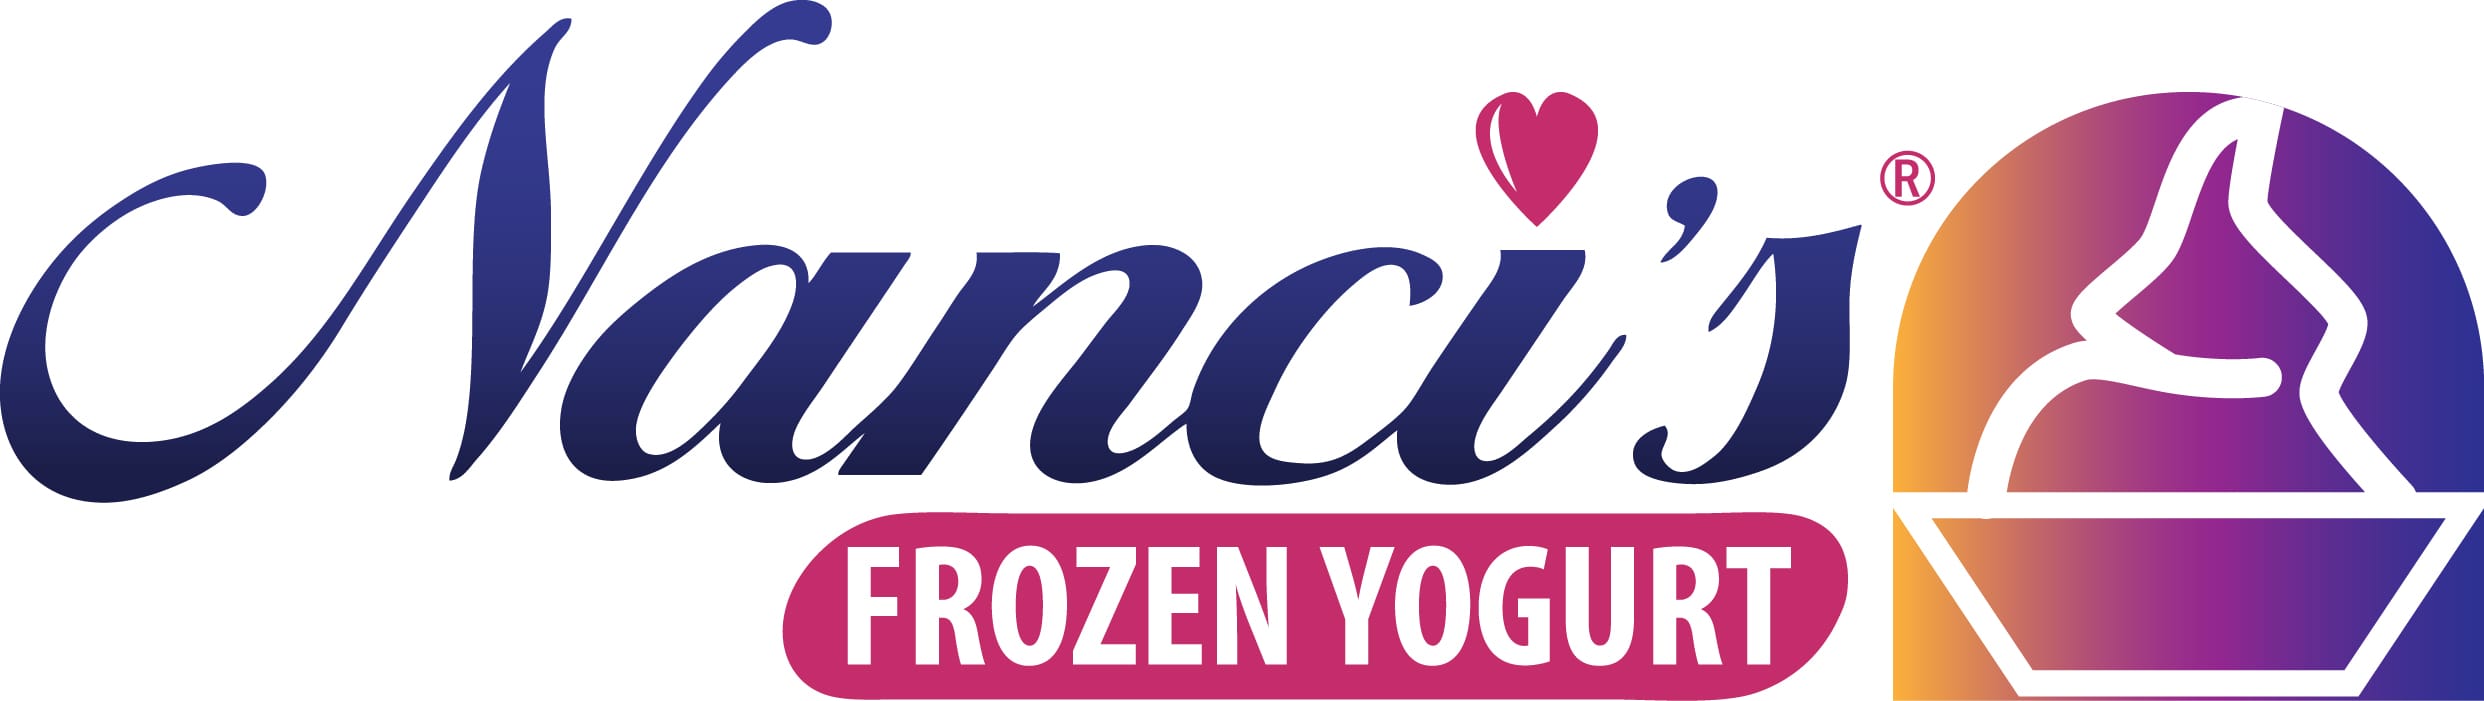 Frozen Yogurt Shops - ﻿​1-844-52-PASMO (844-527-2766)​PASMO AMERICA​